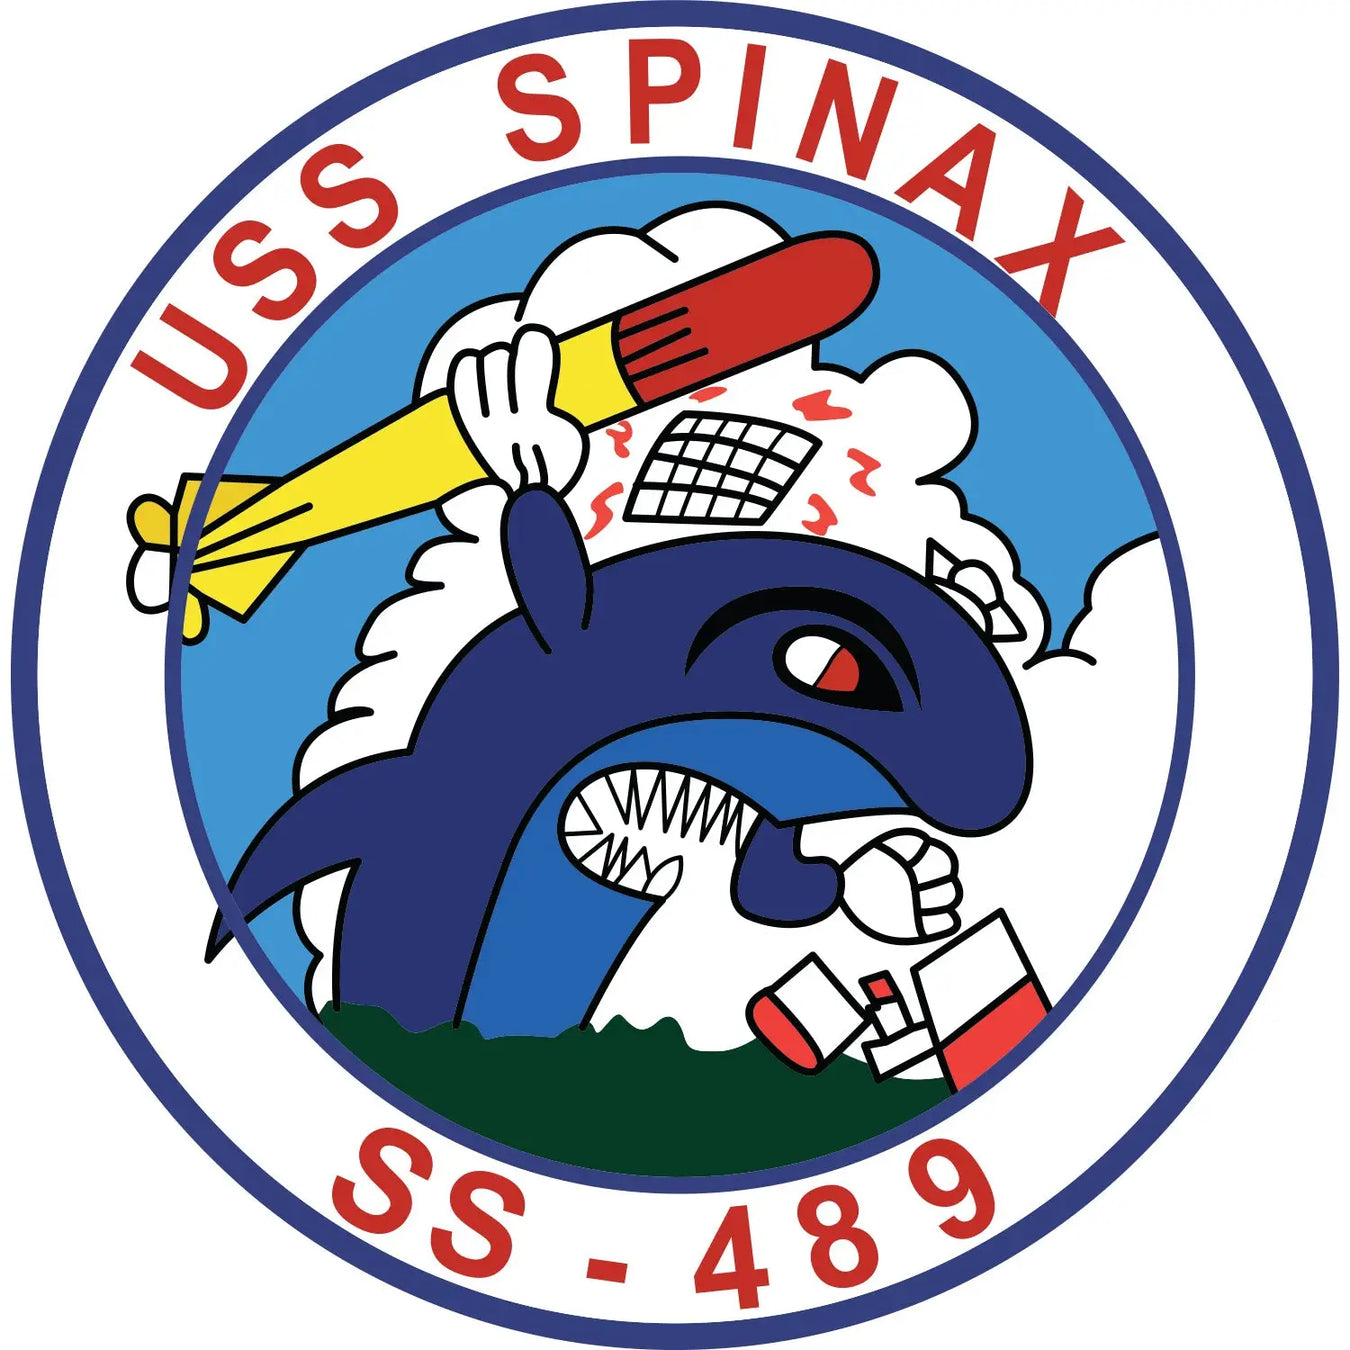 USS Spinax (SS-489)